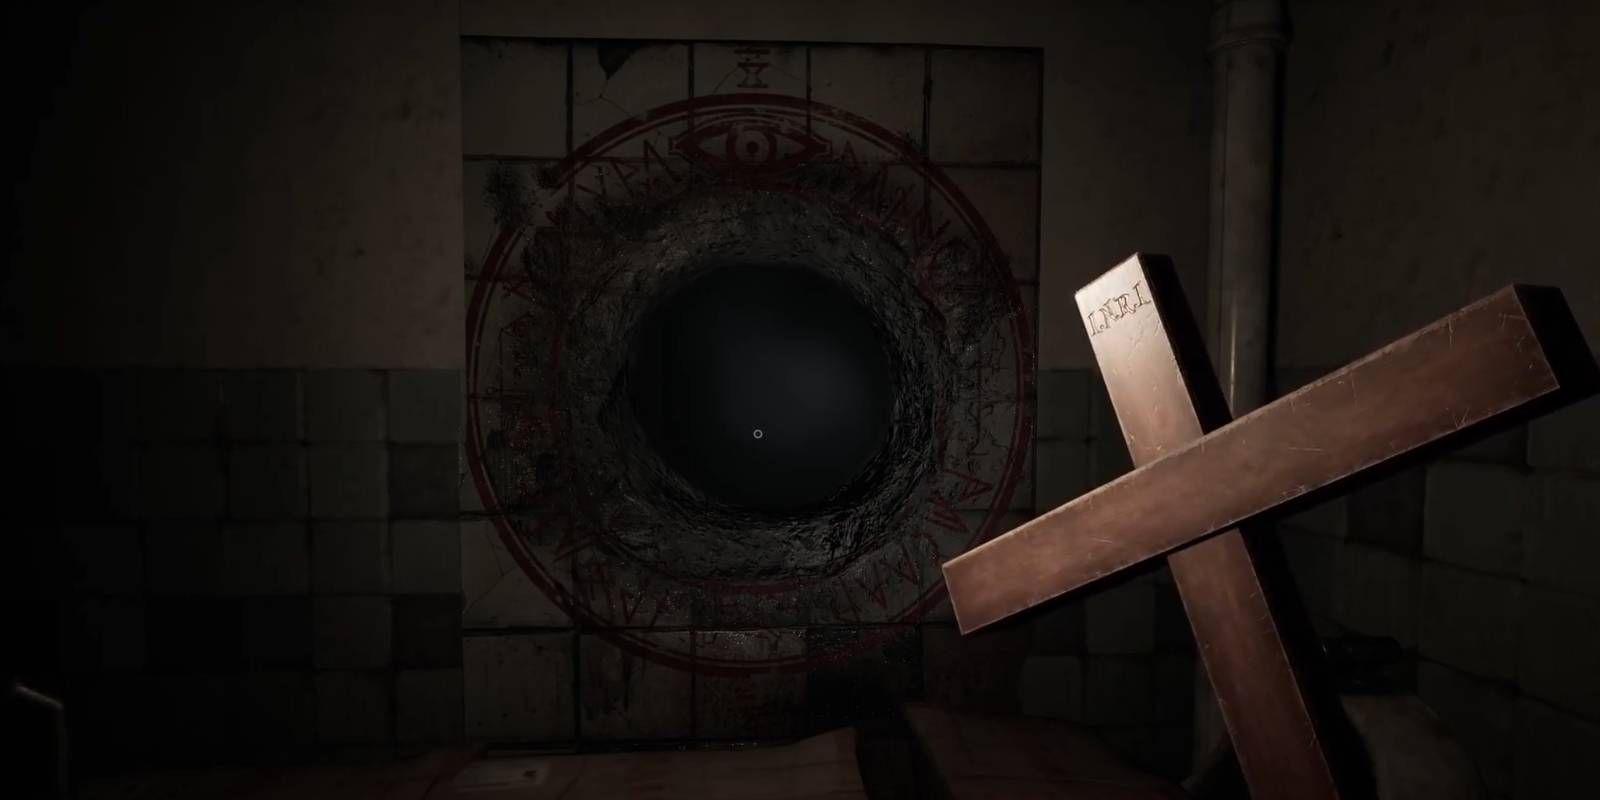 Demonólogo: Cómo activar el Easter Egg de Silent Hill